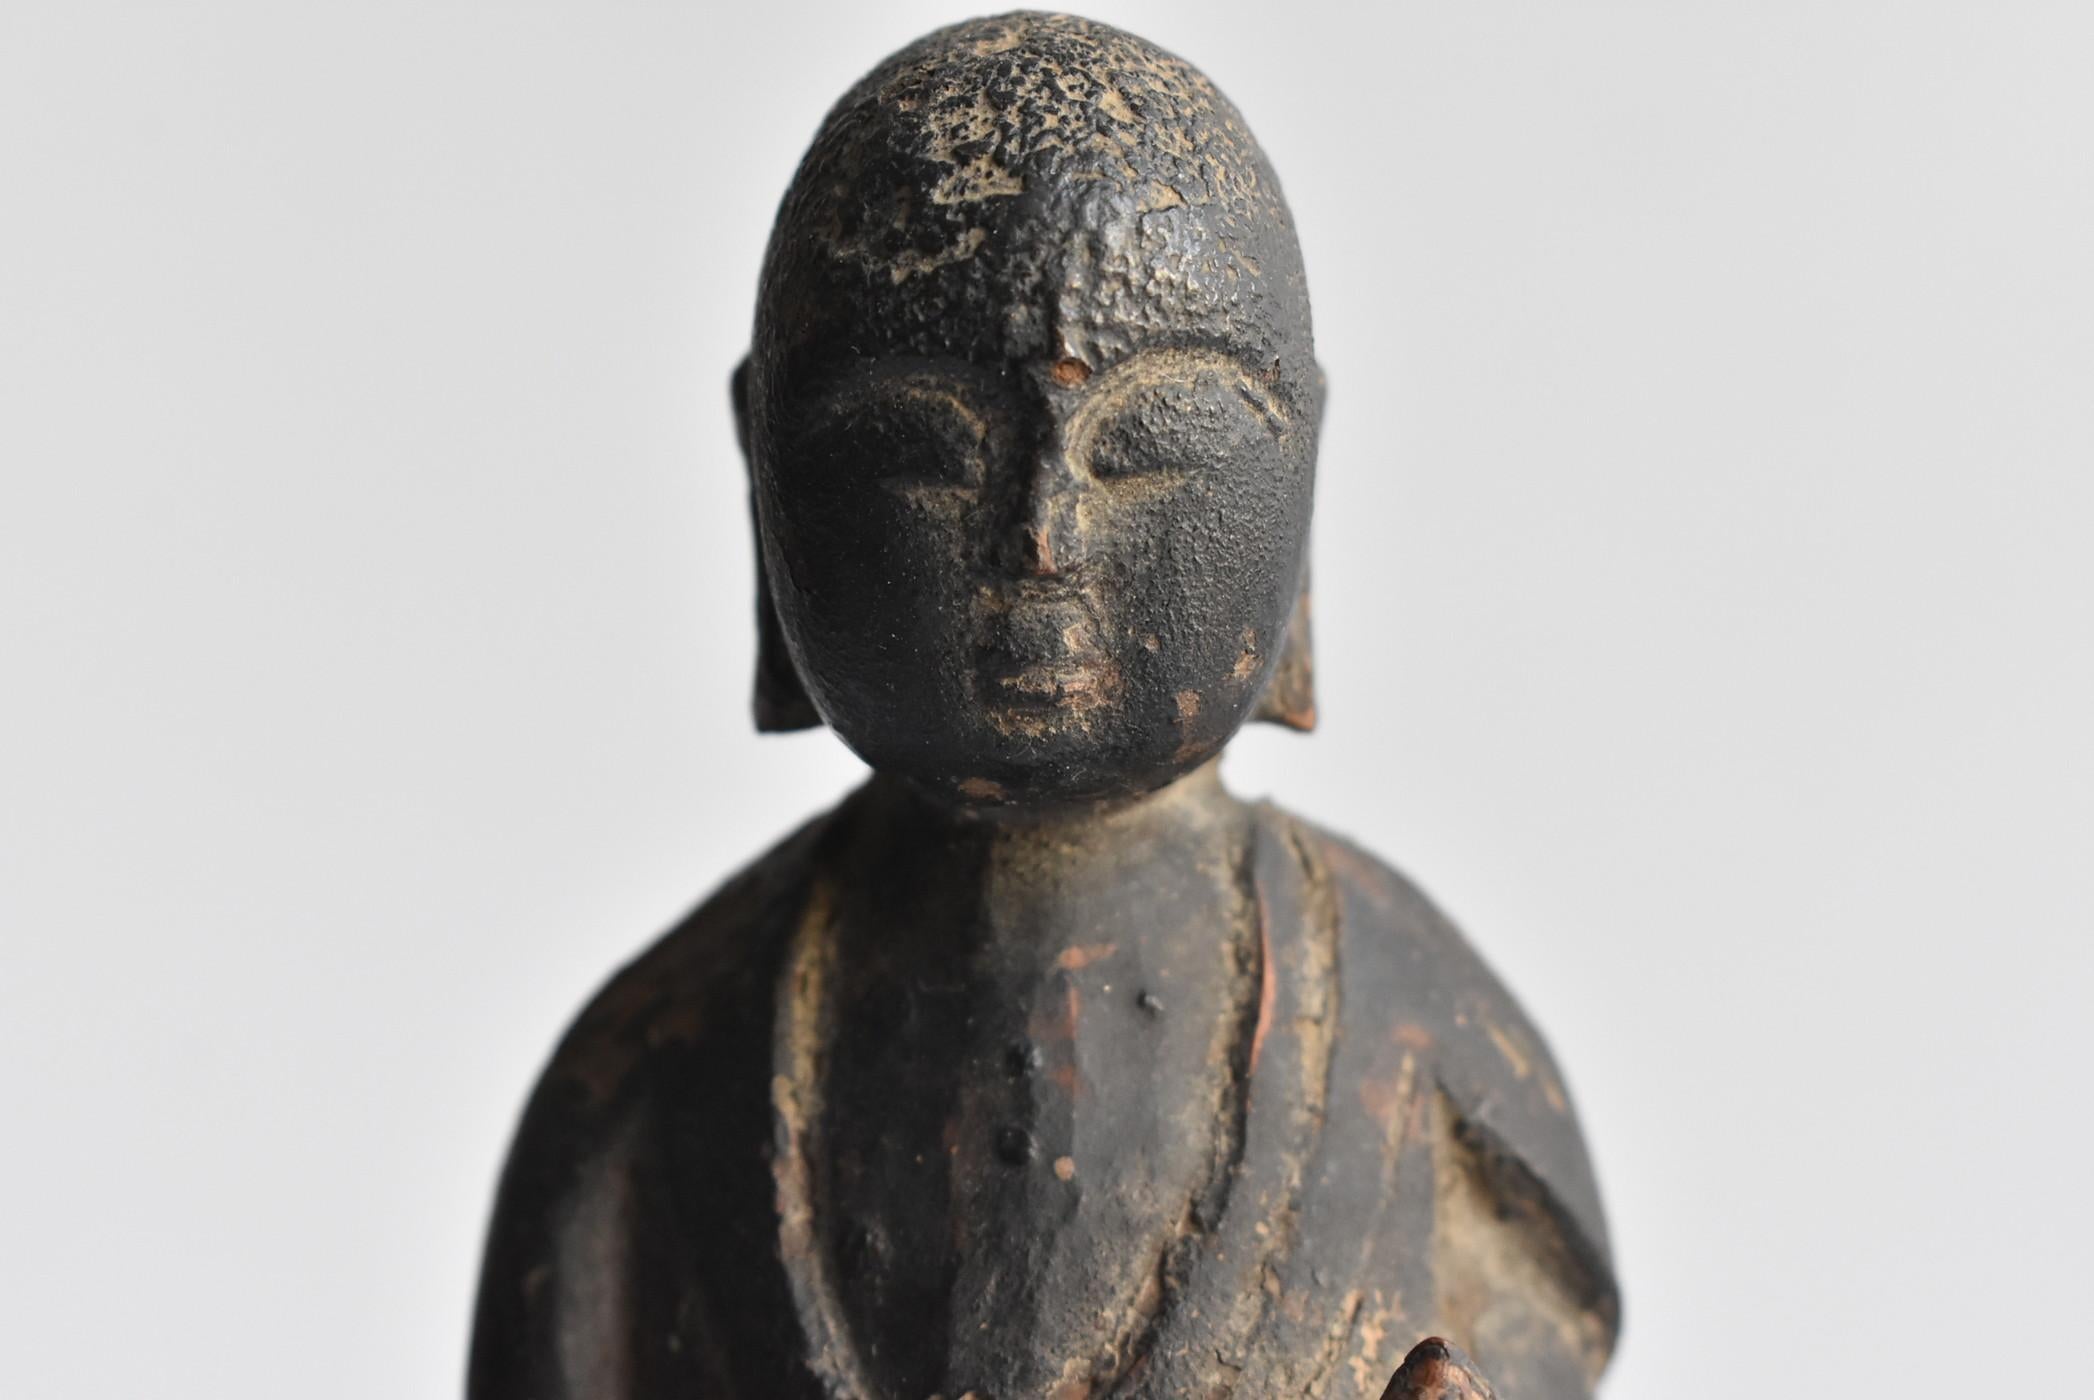 Hand-Carved Japane Wood Carving Jizo Bodhisattva Statue /Buddha Statue, circa 1400s-1600s